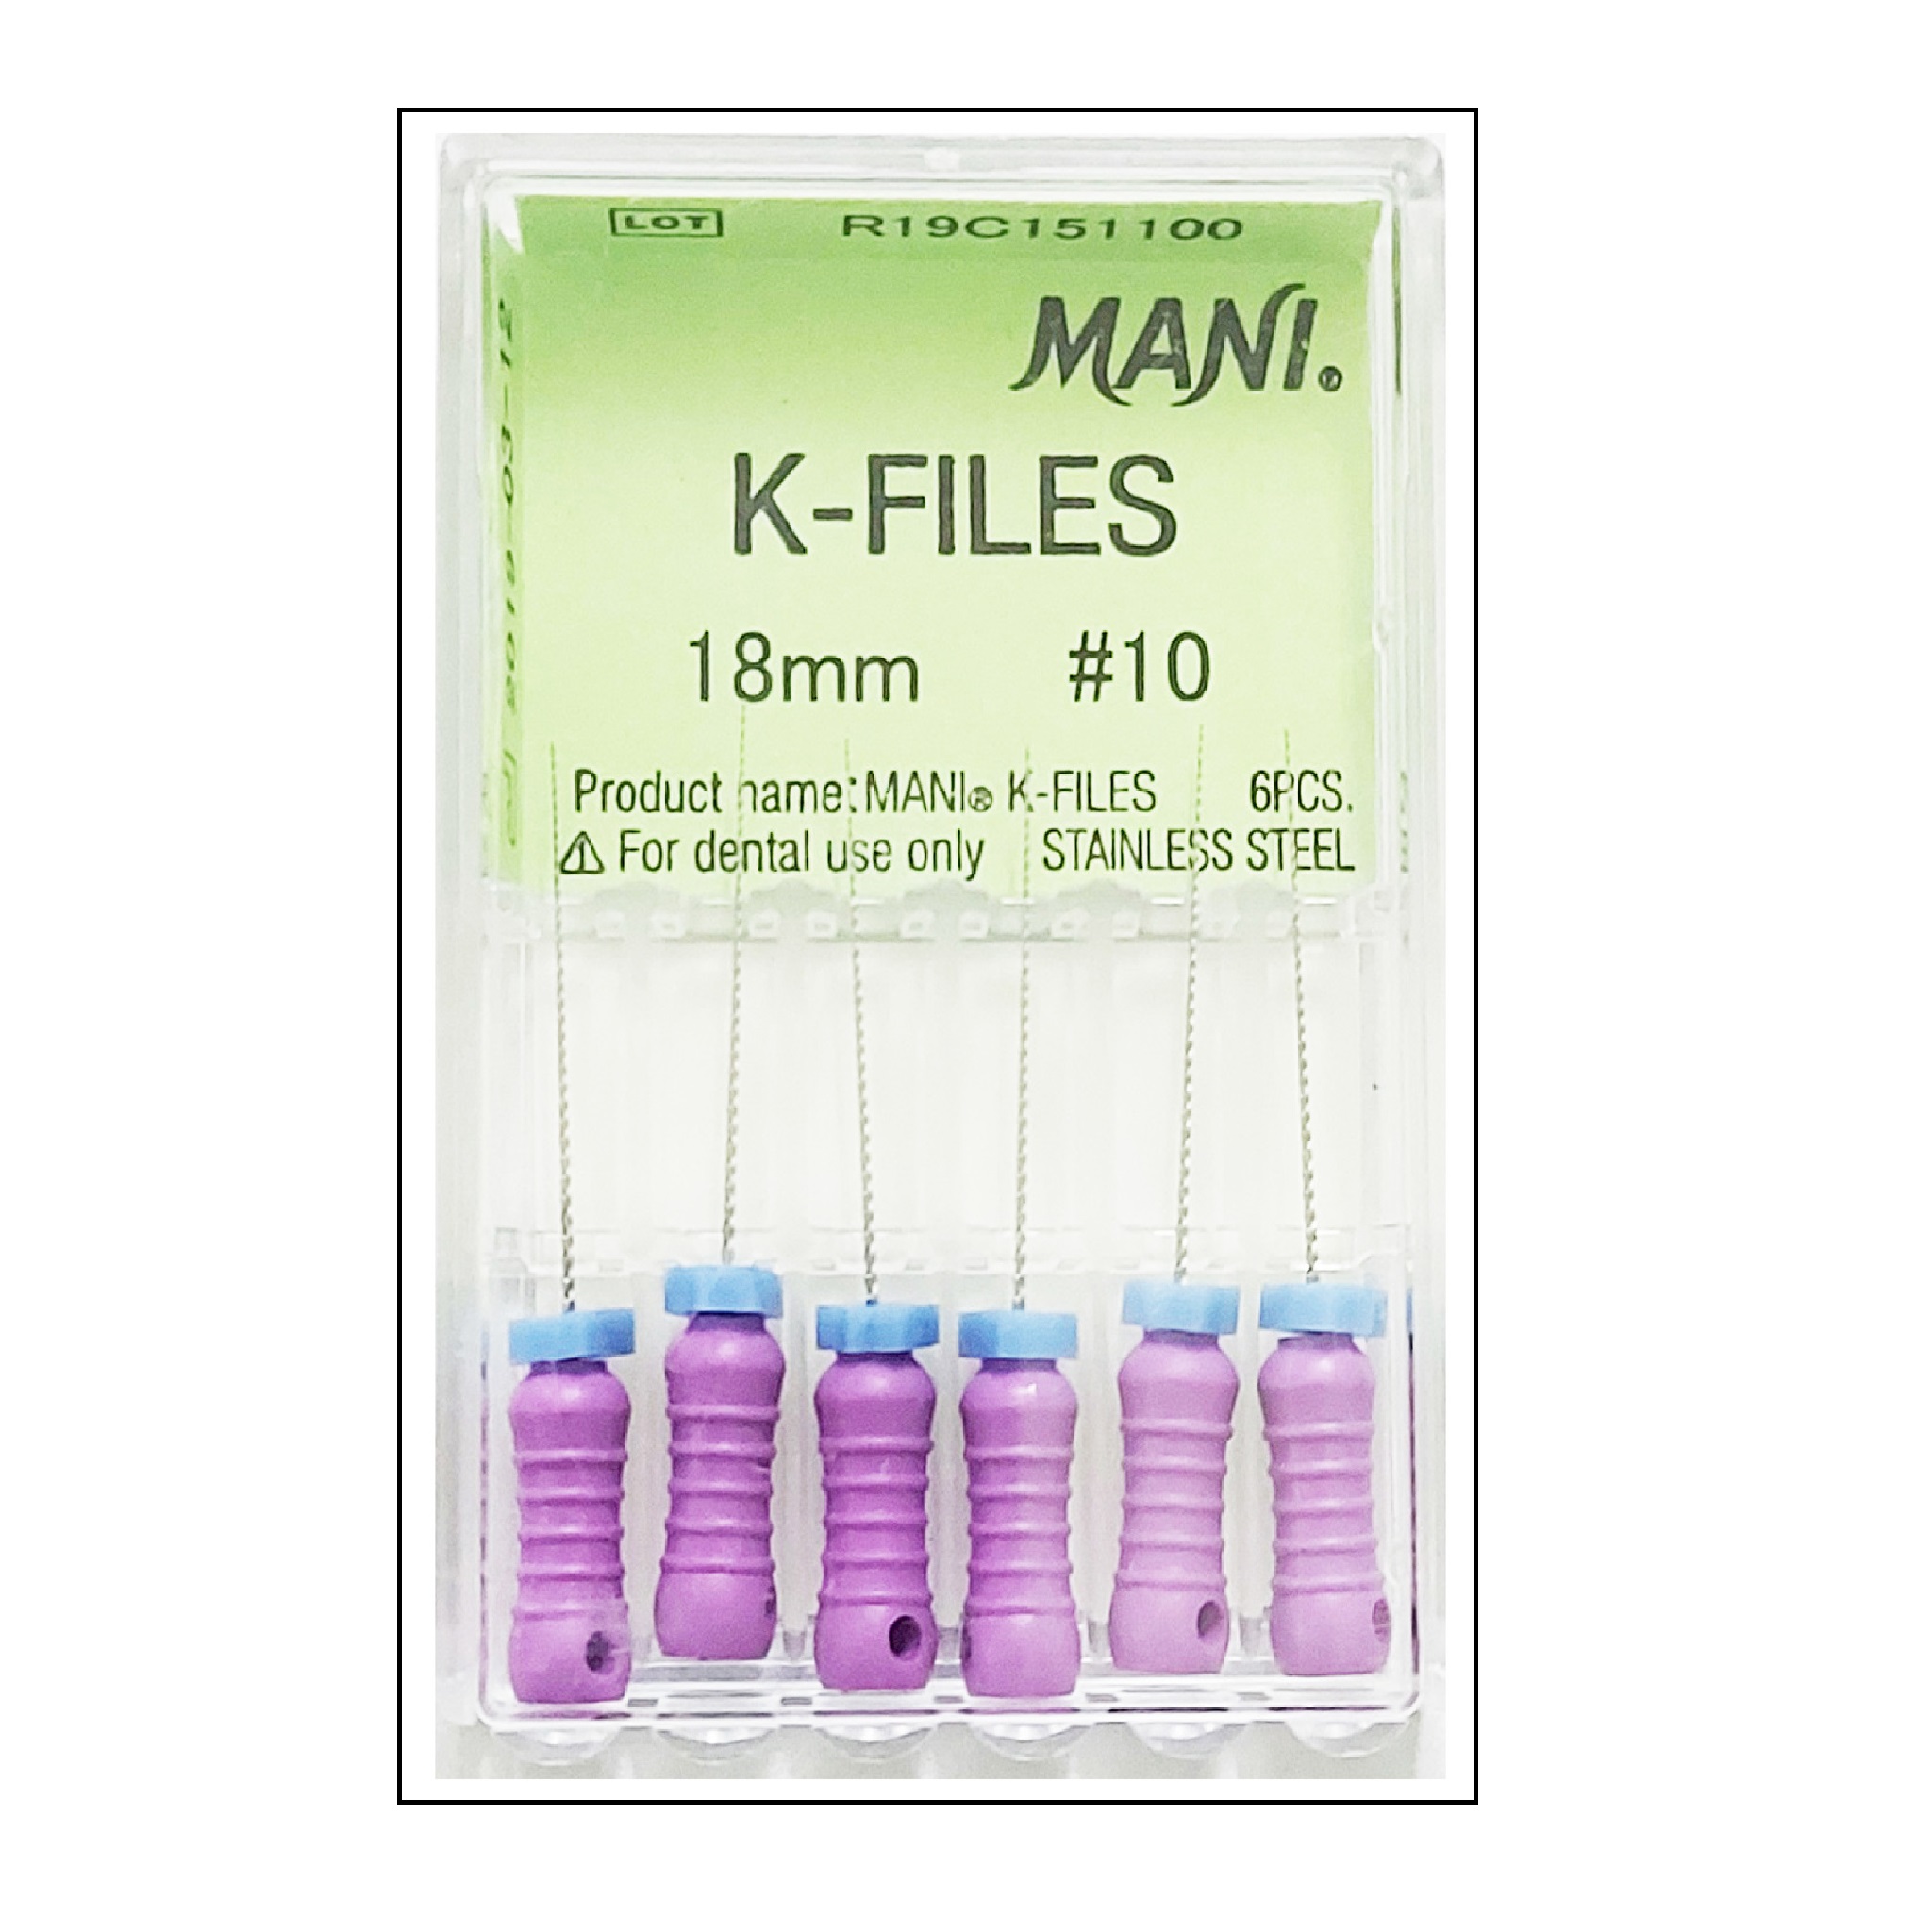 Mani K Files 18mm #15-40 Dental Endo